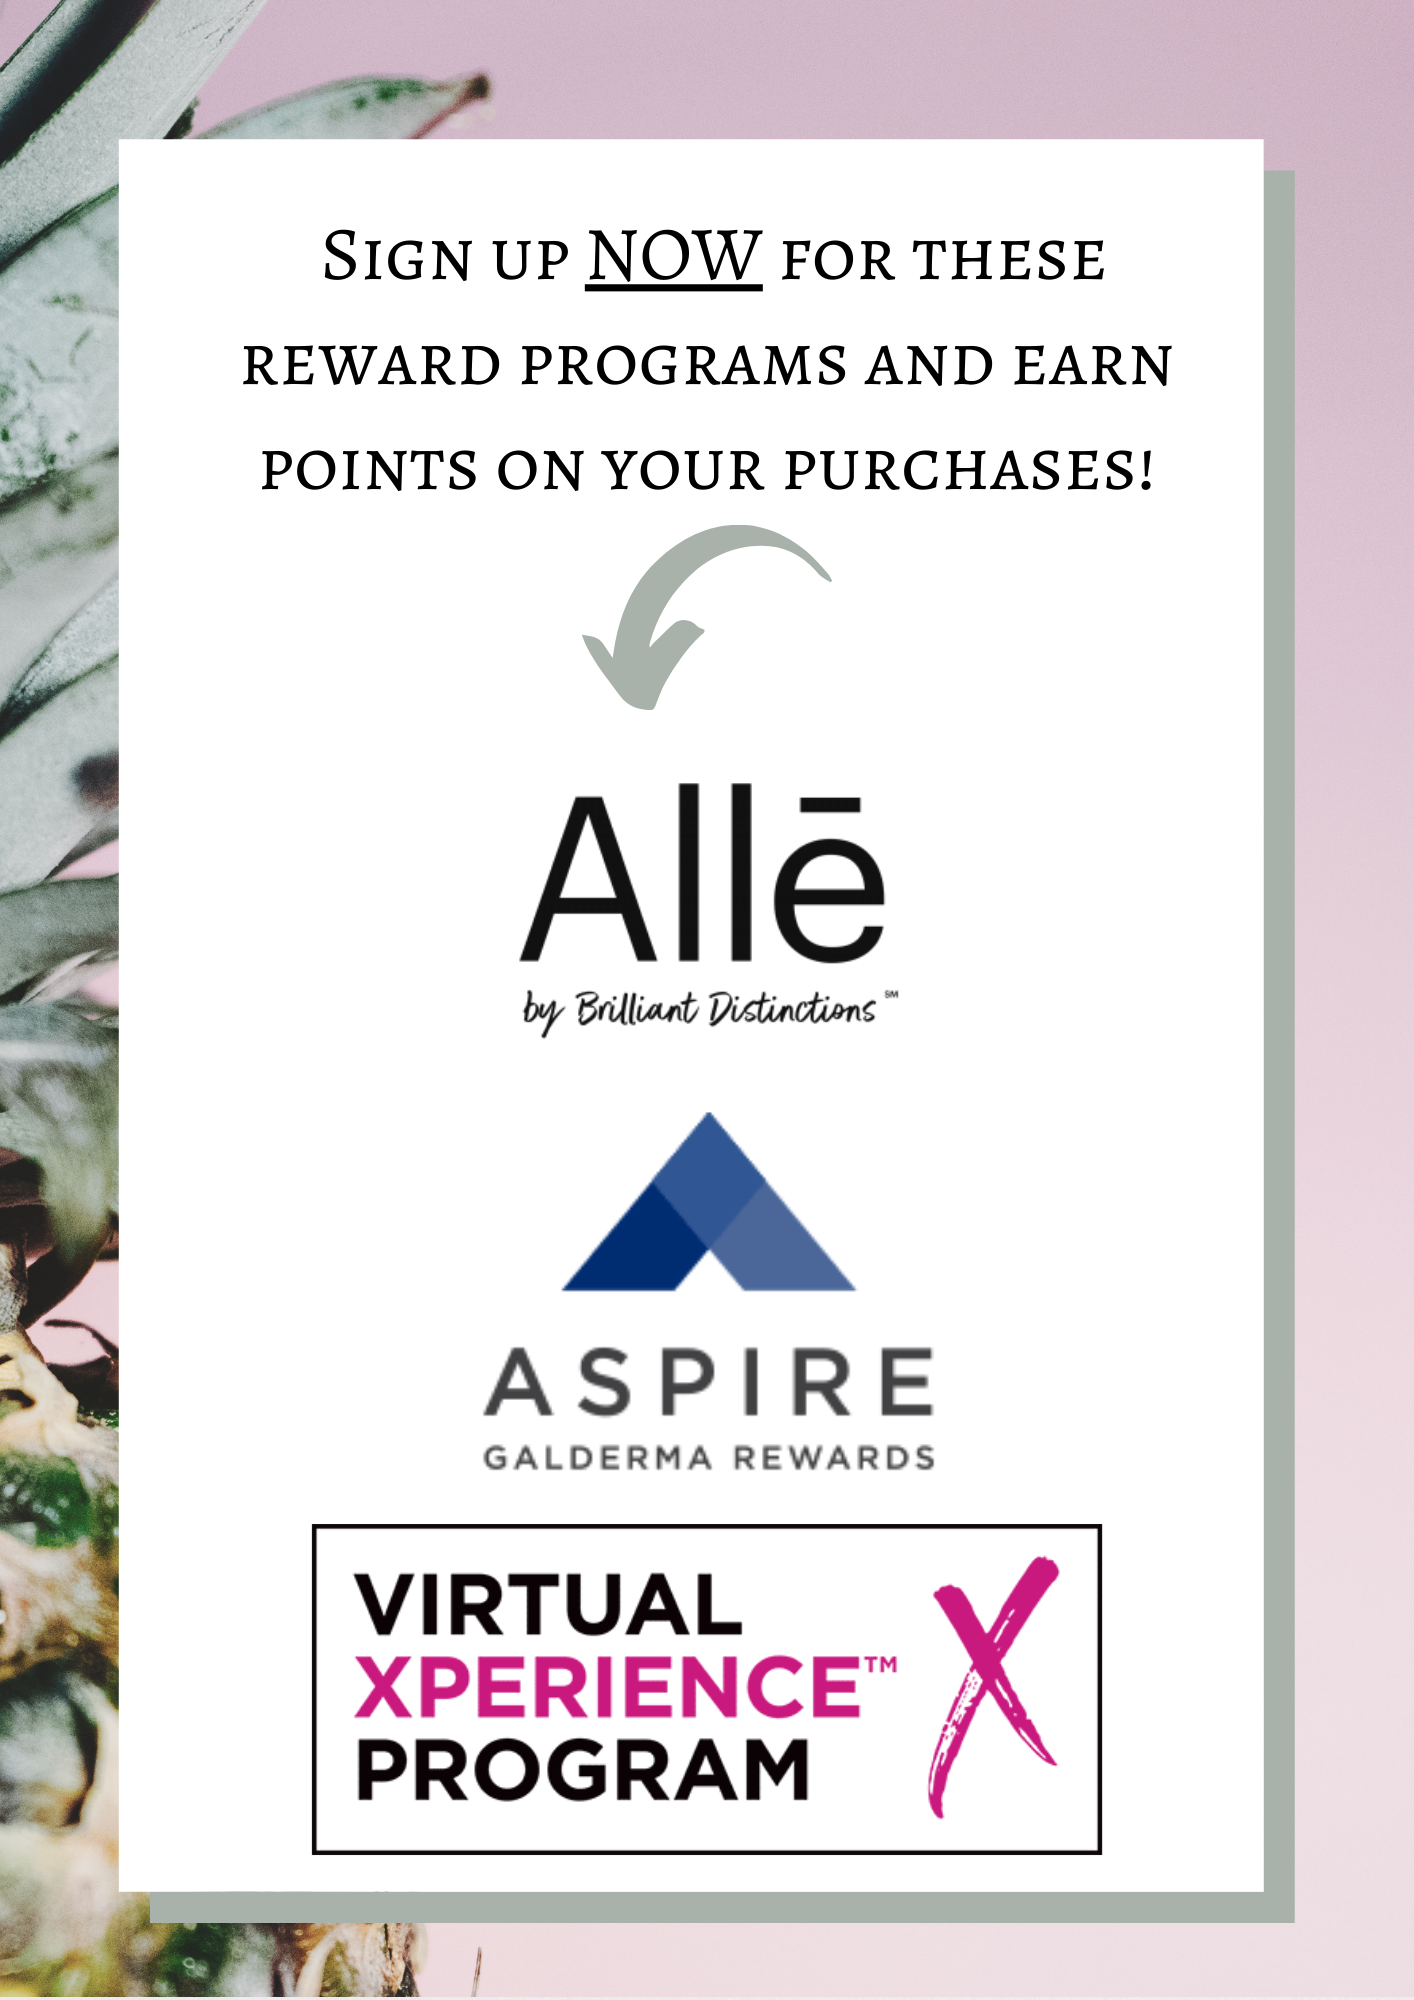 May Rewards Programs